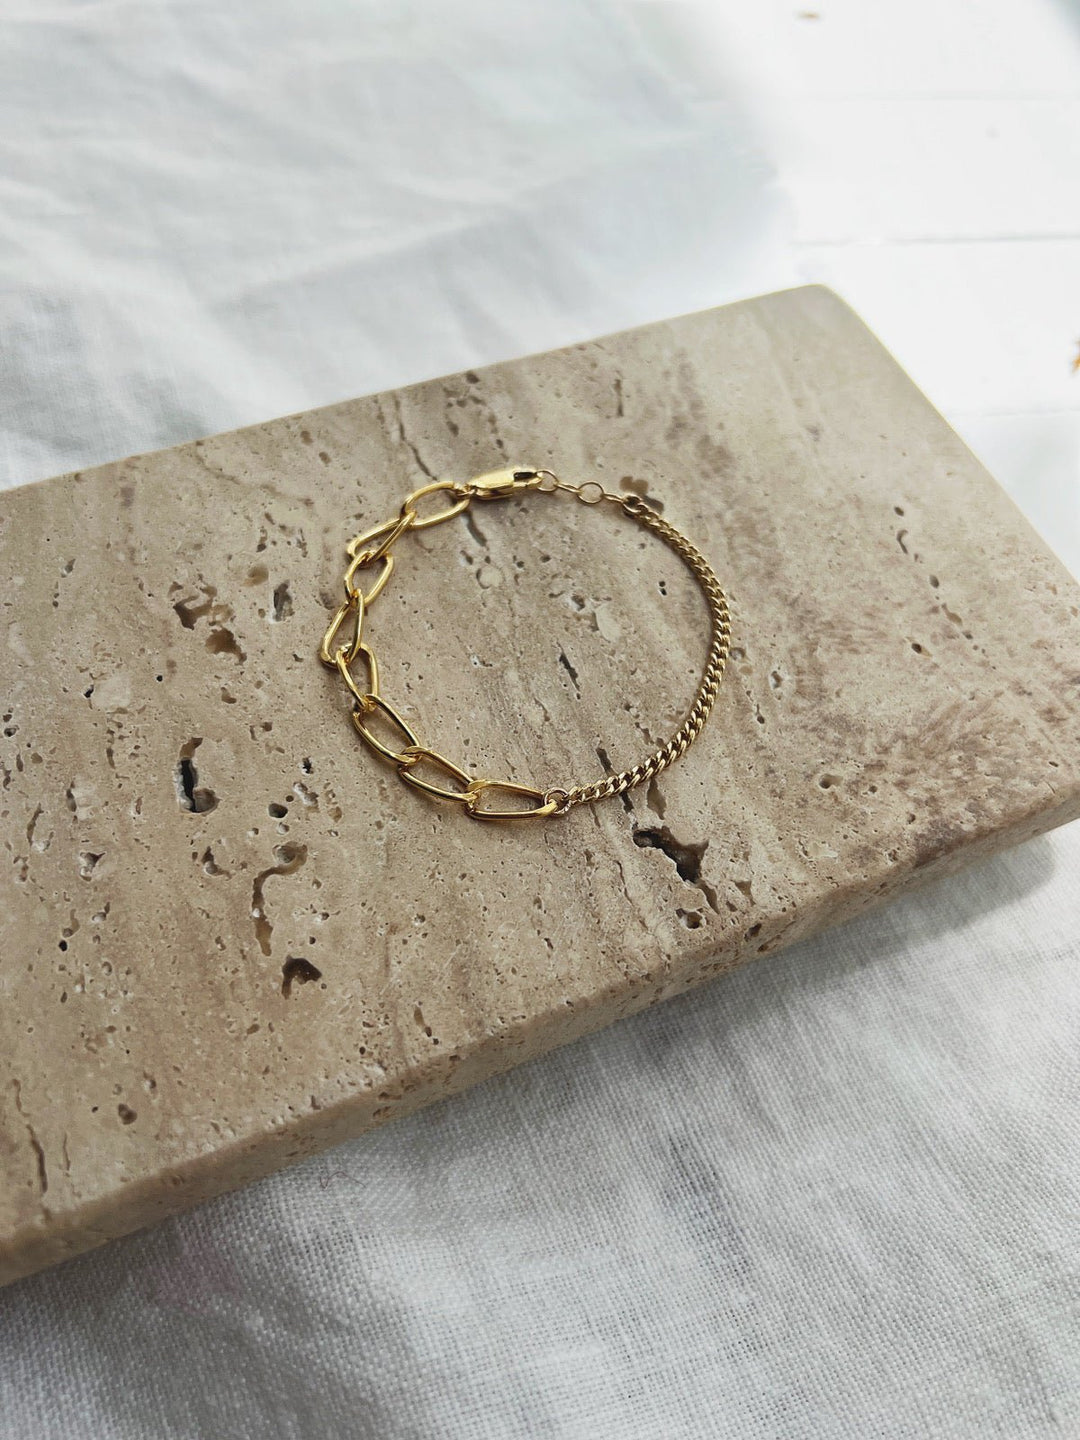 Chain + Link Combination Bracelet, Gold Filled - Spring Sweet